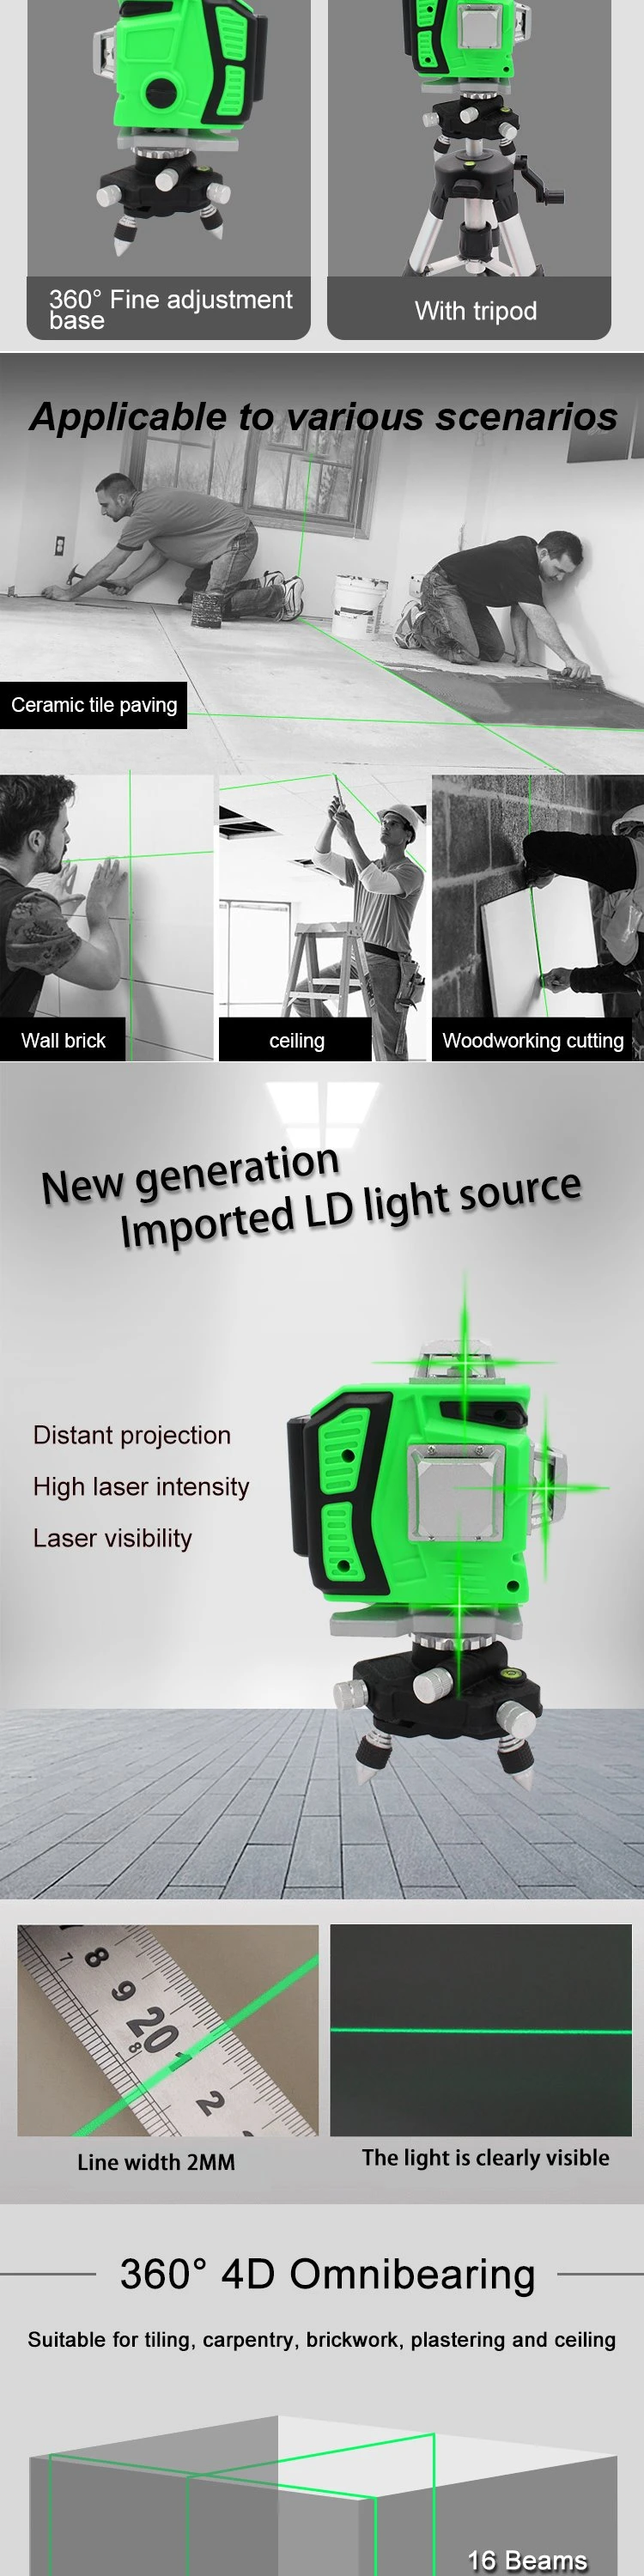 4D Green Beam Self Leveling Laser